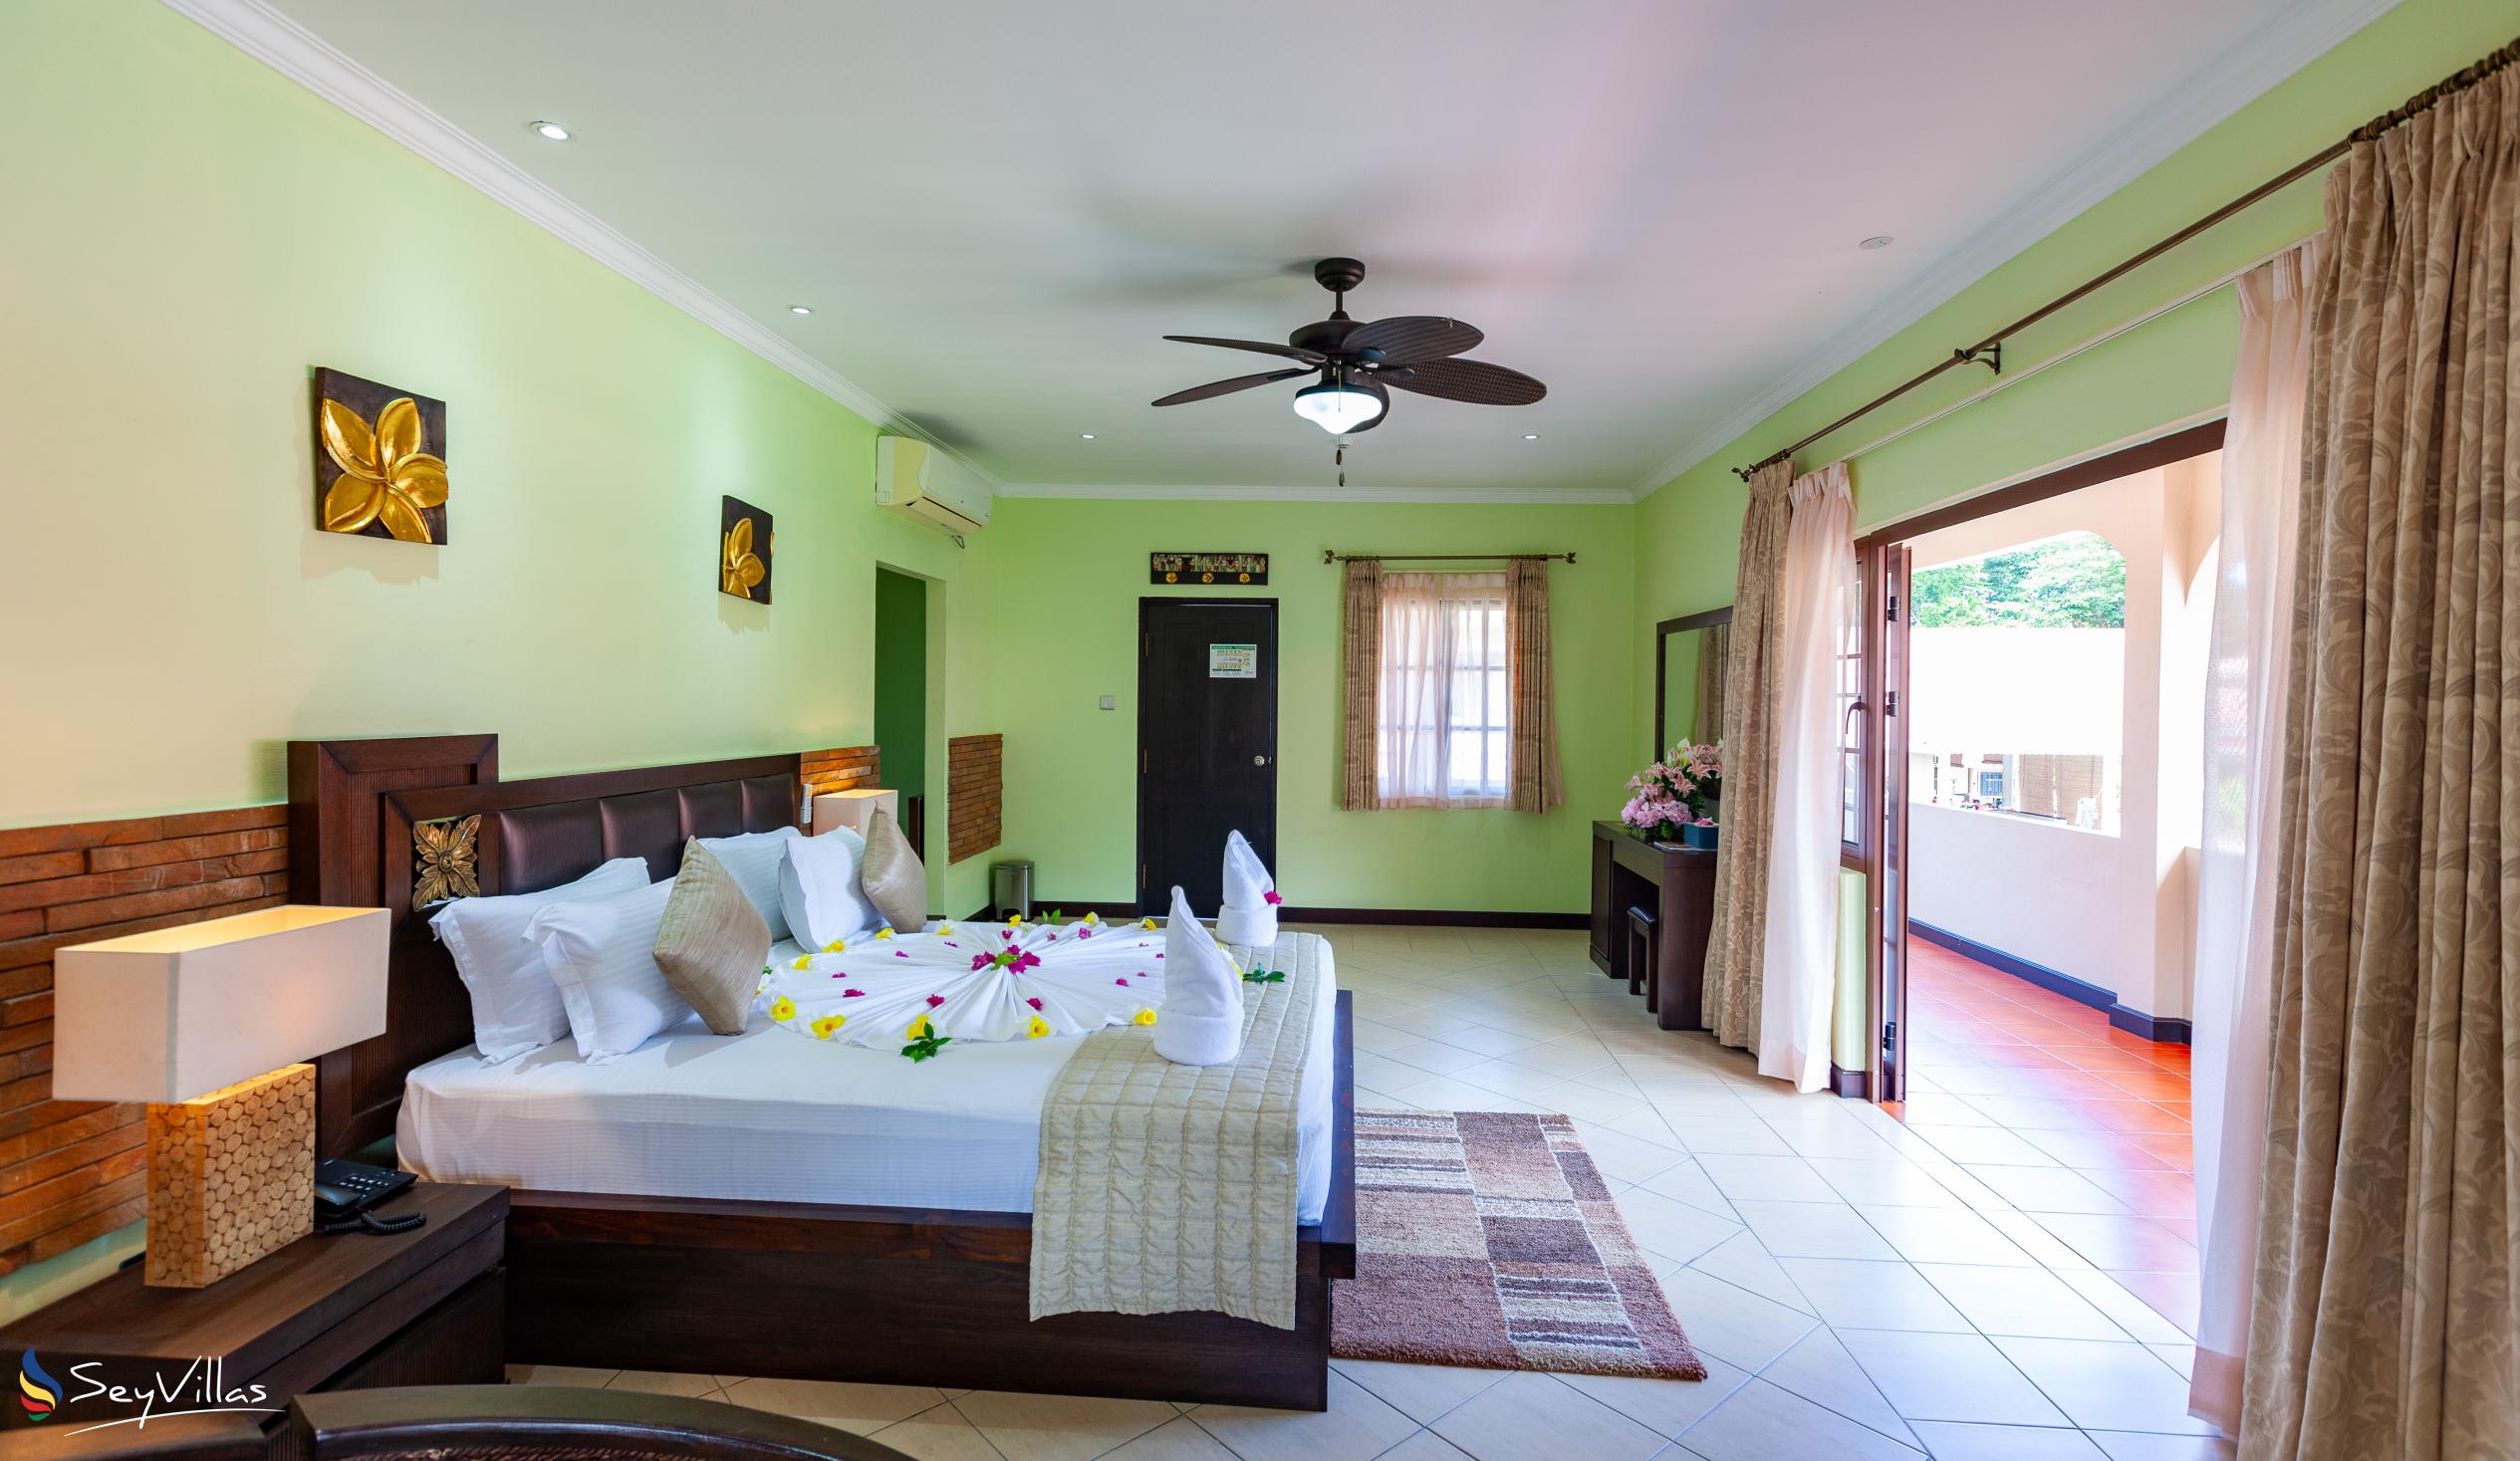 Foto 59: Oasis Hotel, Restaurant & Spa - Camera Deluxe - Praslin (Seychelles)